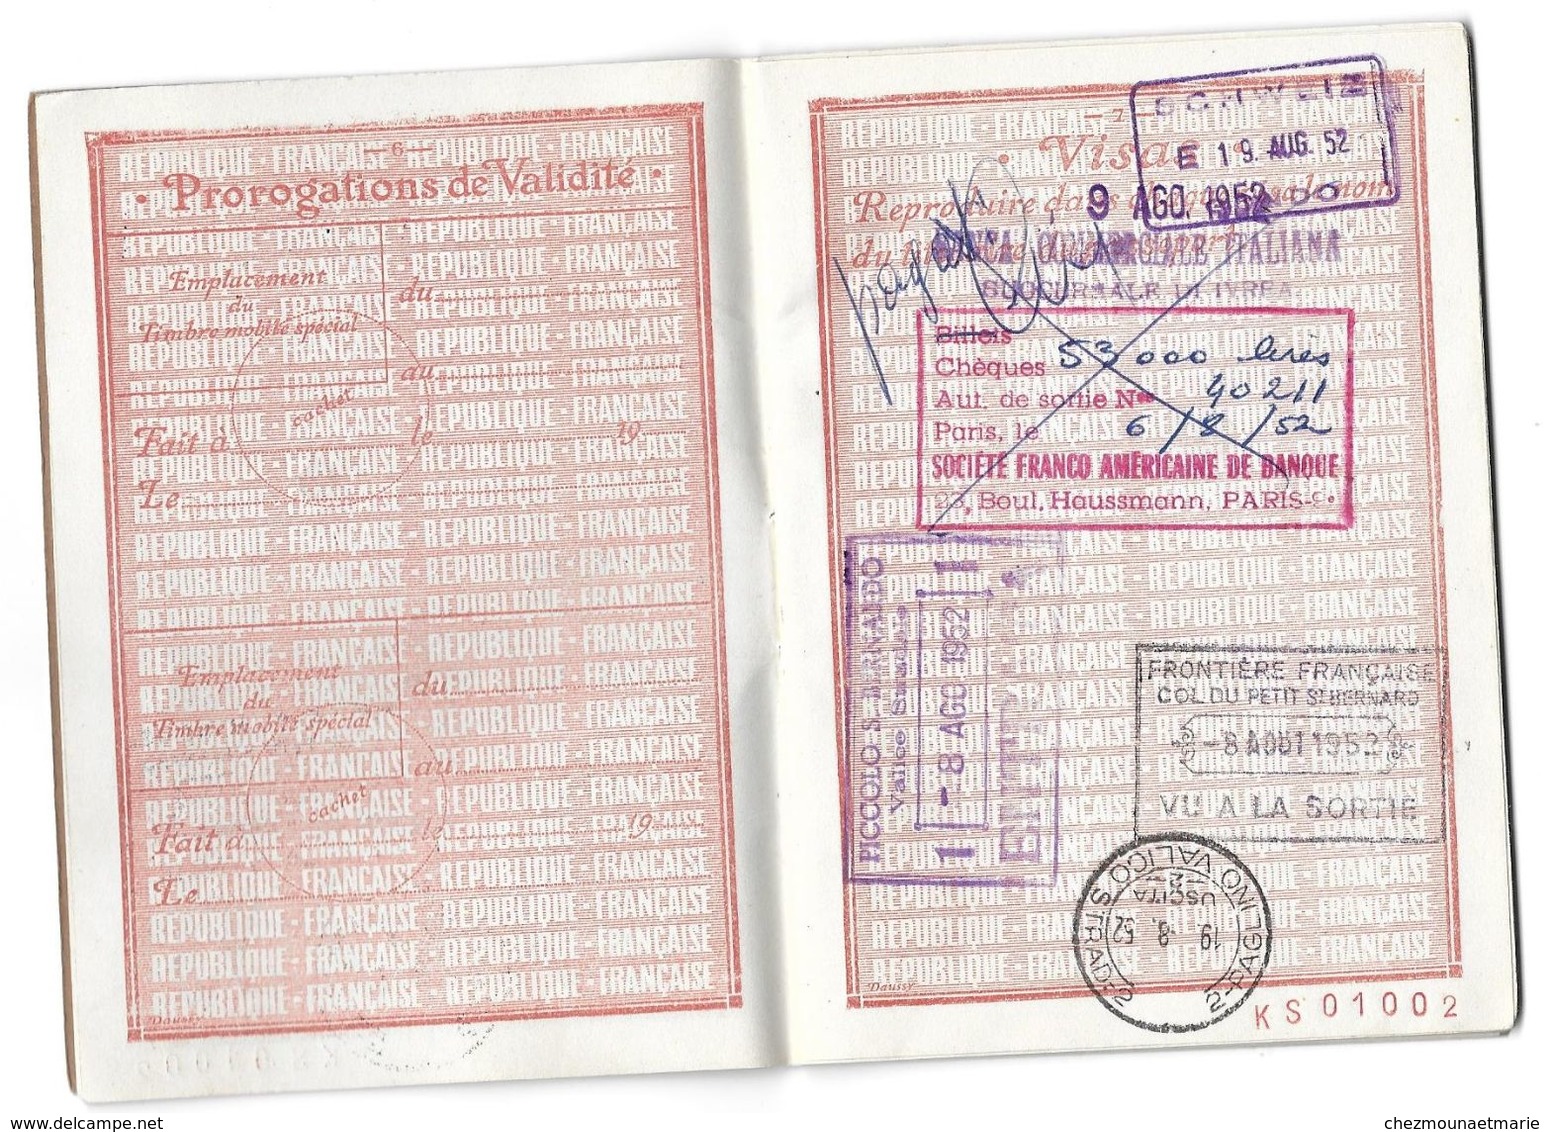 PASSEPORT 1952 - MARCADON  NE 1907 CHATEAUROUX INGENIEUR - HABITE COLOMBES - TAMPONS SUISSE ITALIE - Historical Documents